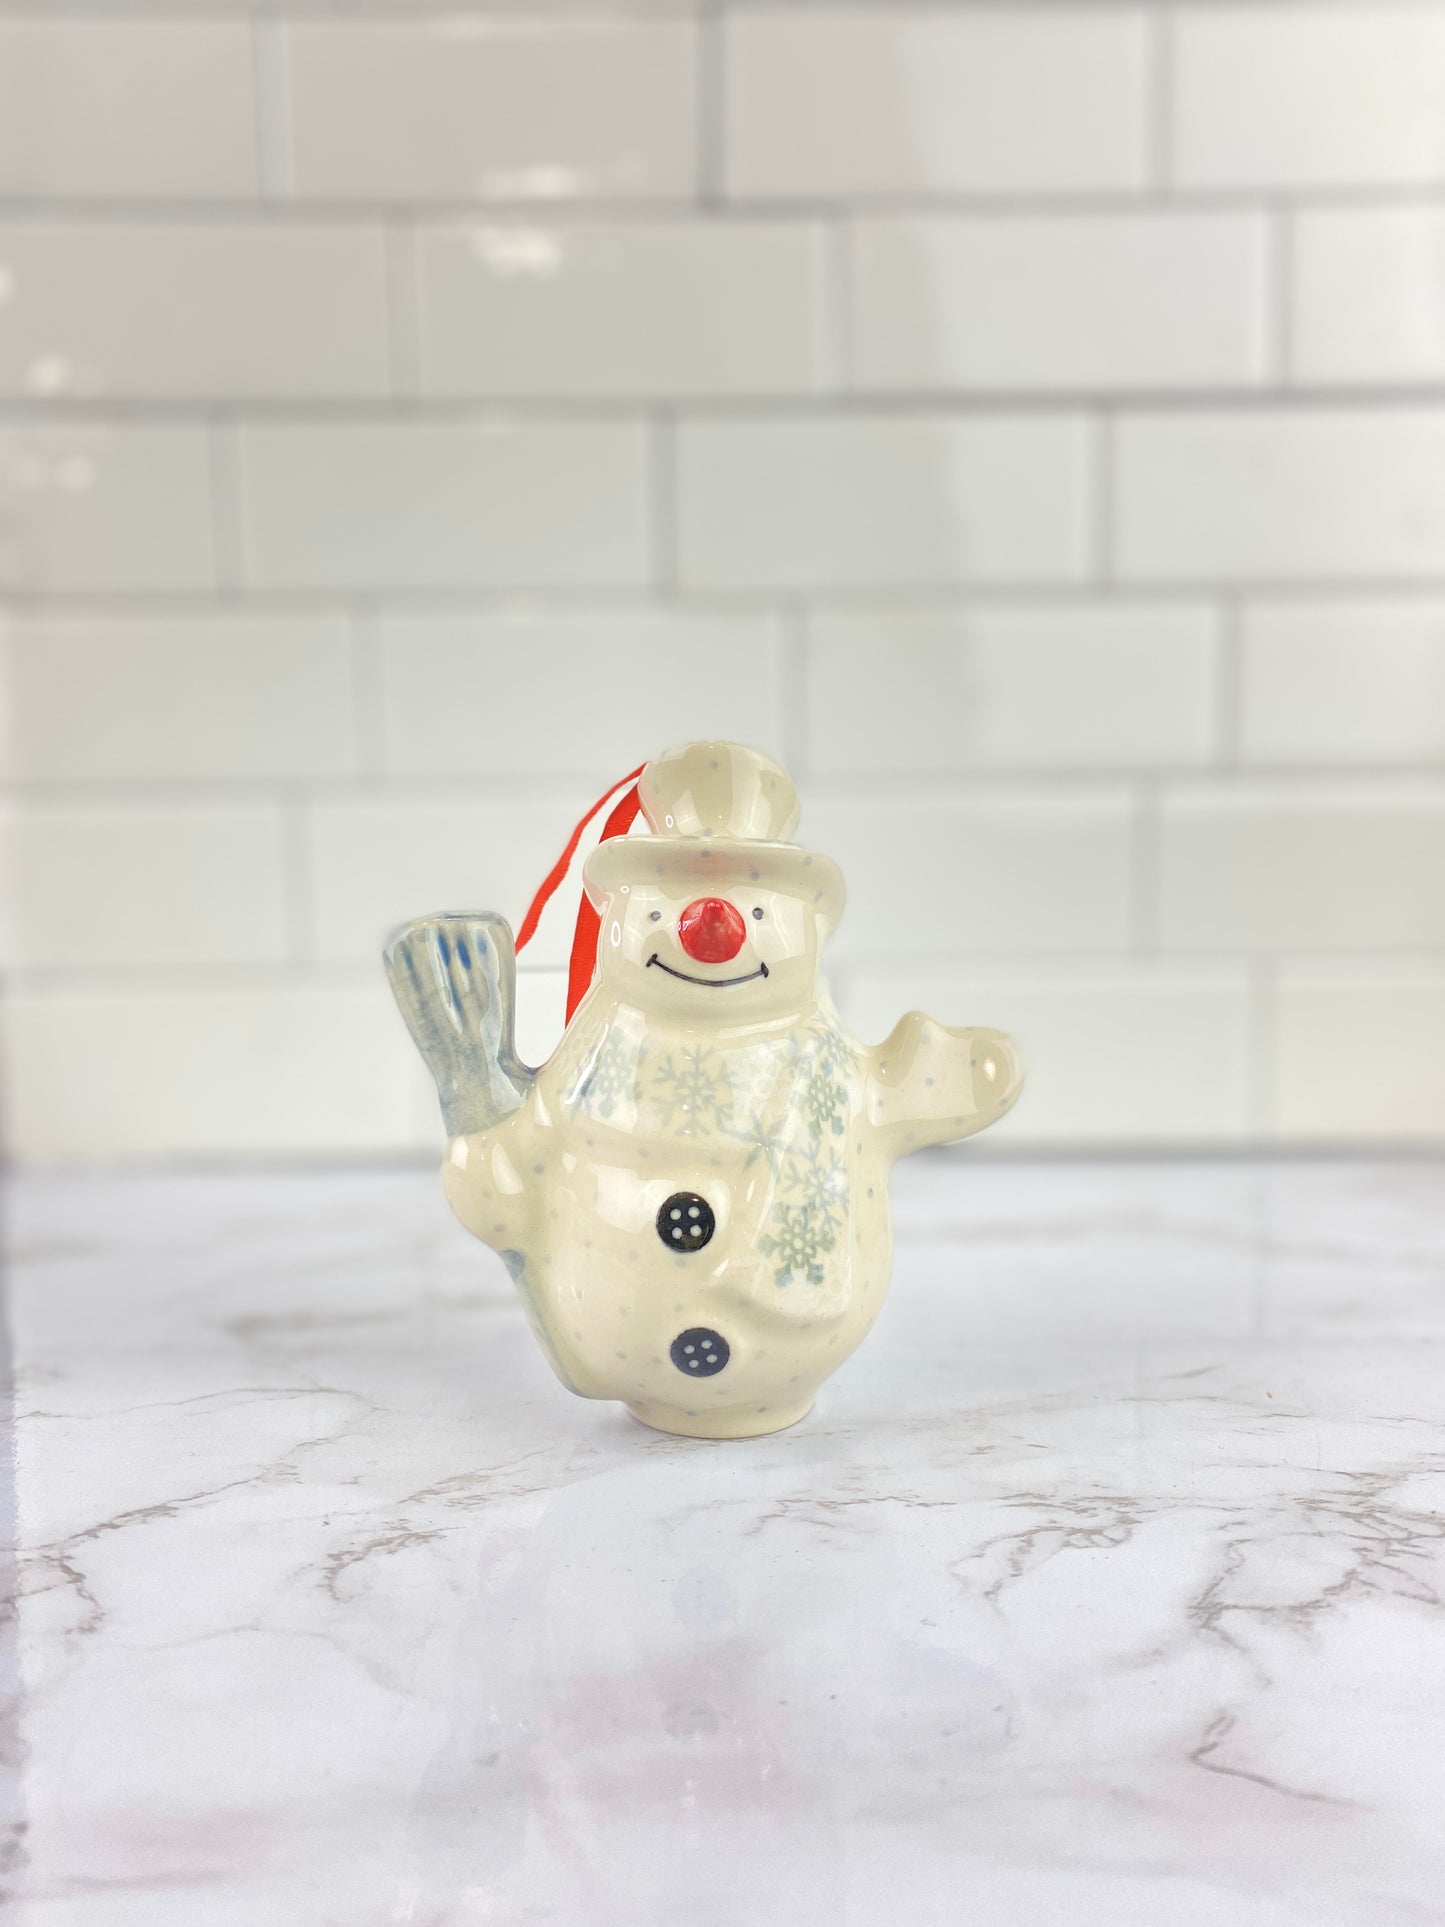 Short Snowman Ornament With Broom - Shape F61 - Pattern 2712